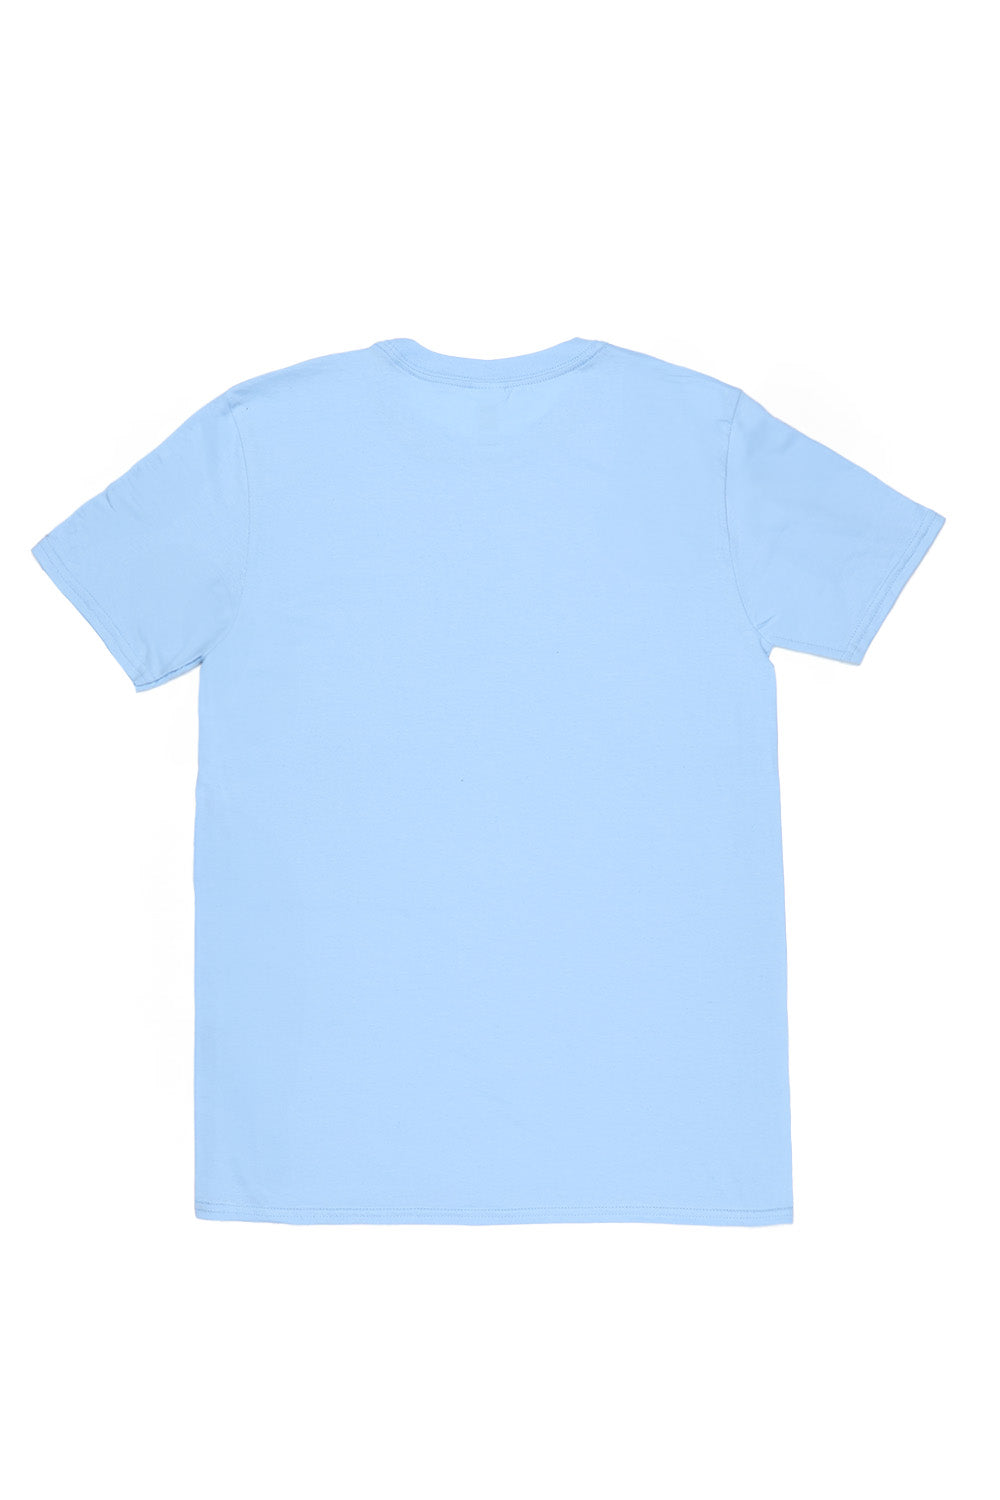 C'est La Vie Paris Slogan T-Shirt In Light Blue (Custom Pack)